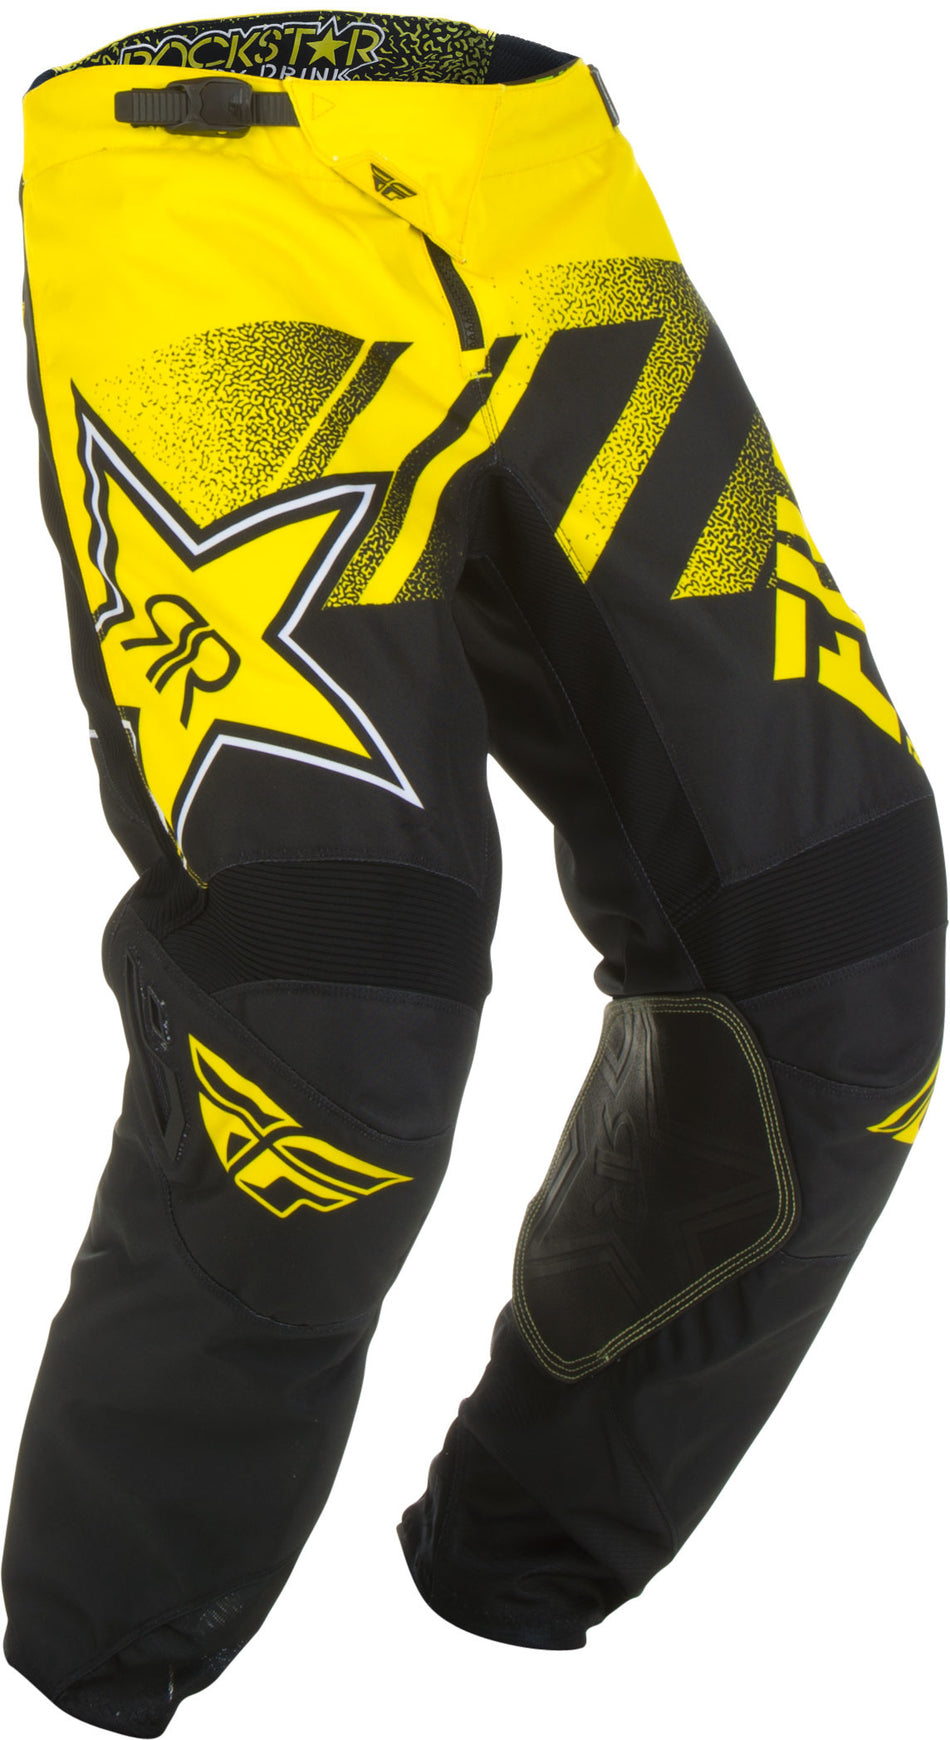 FLY RACING Kinetic Rockstar Pants Yellow/Black Sz 38 372-33338